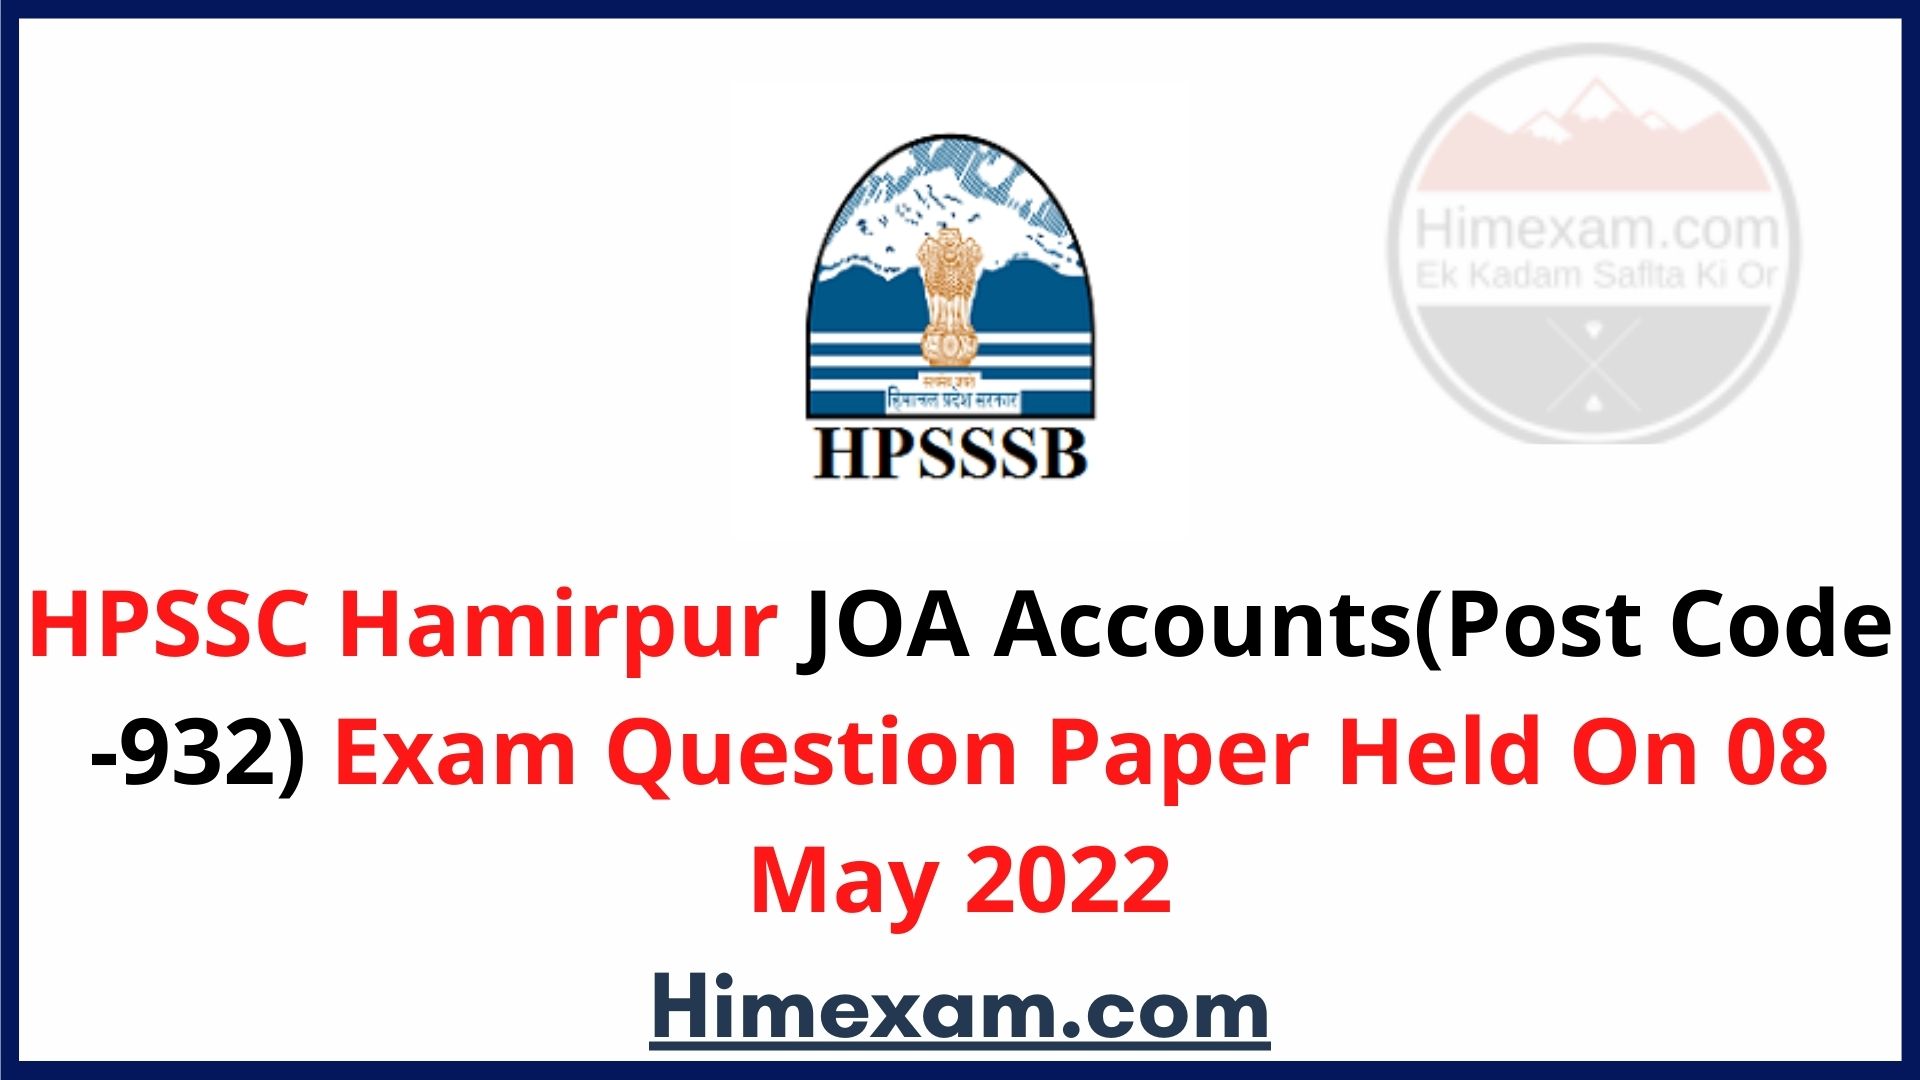 HPSSC Hamirpur JOA Accounts(Post Code -932)  Exam Question Paper Held On 08 may 2022